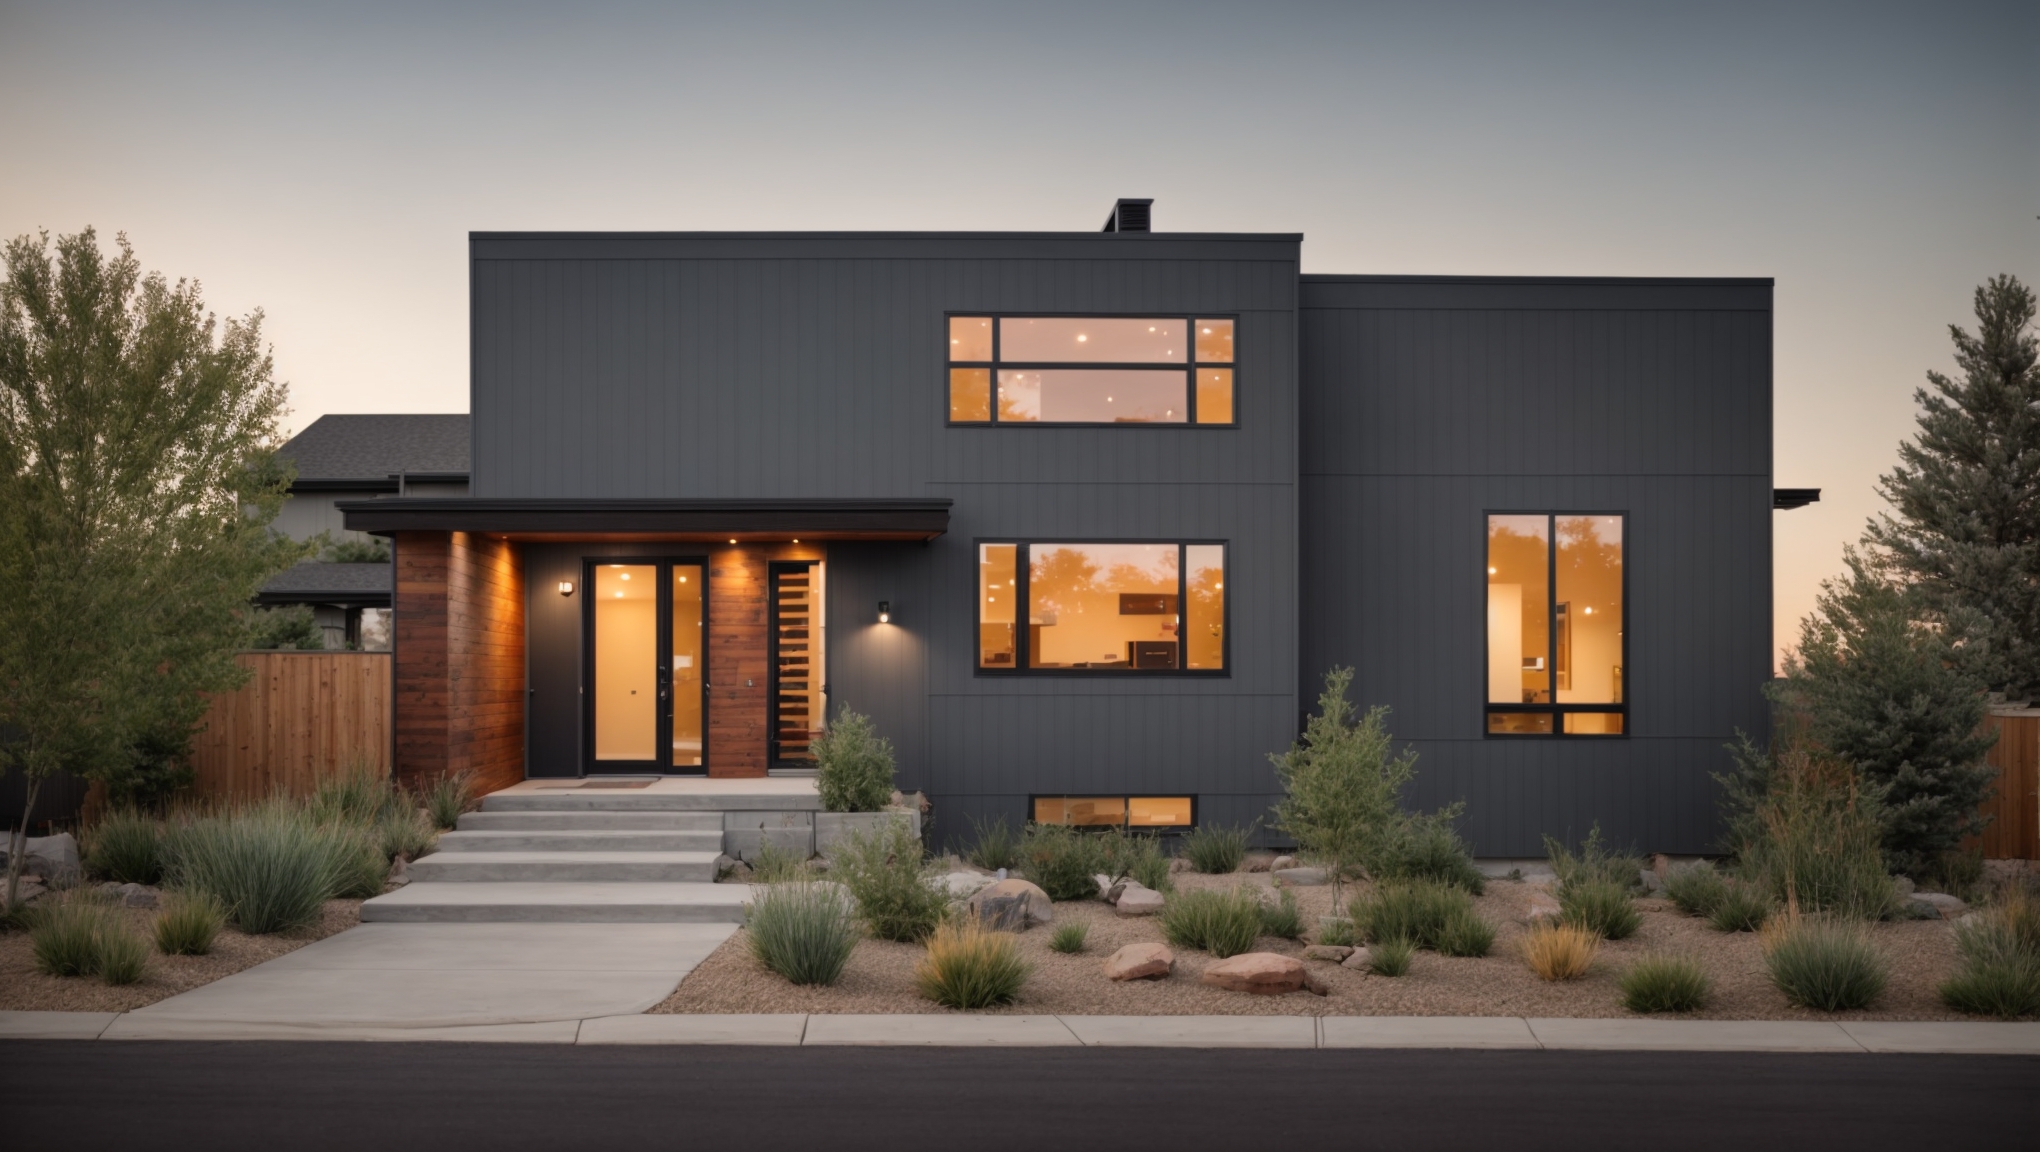 Colorado Springs Craftsman Home with Stucco Siding - Siding Colorado